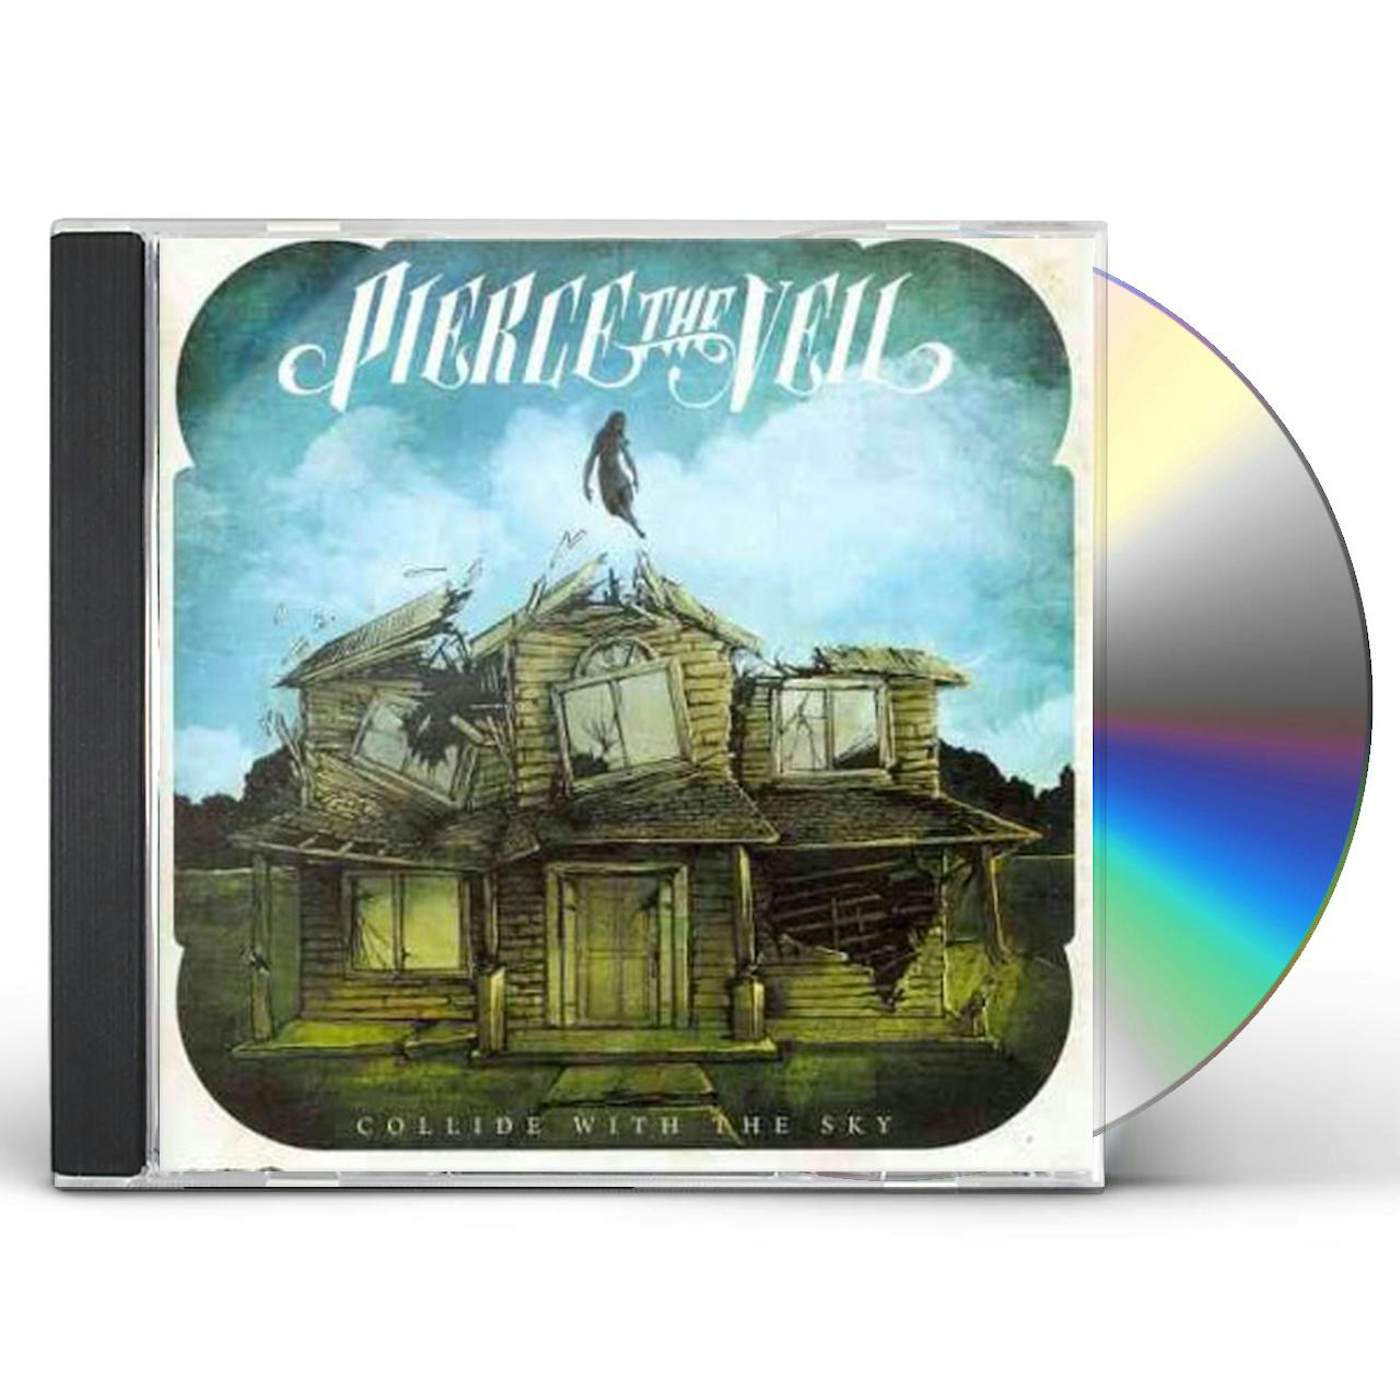 Pierce The Veil COLLIDE WITH THE SKY CD